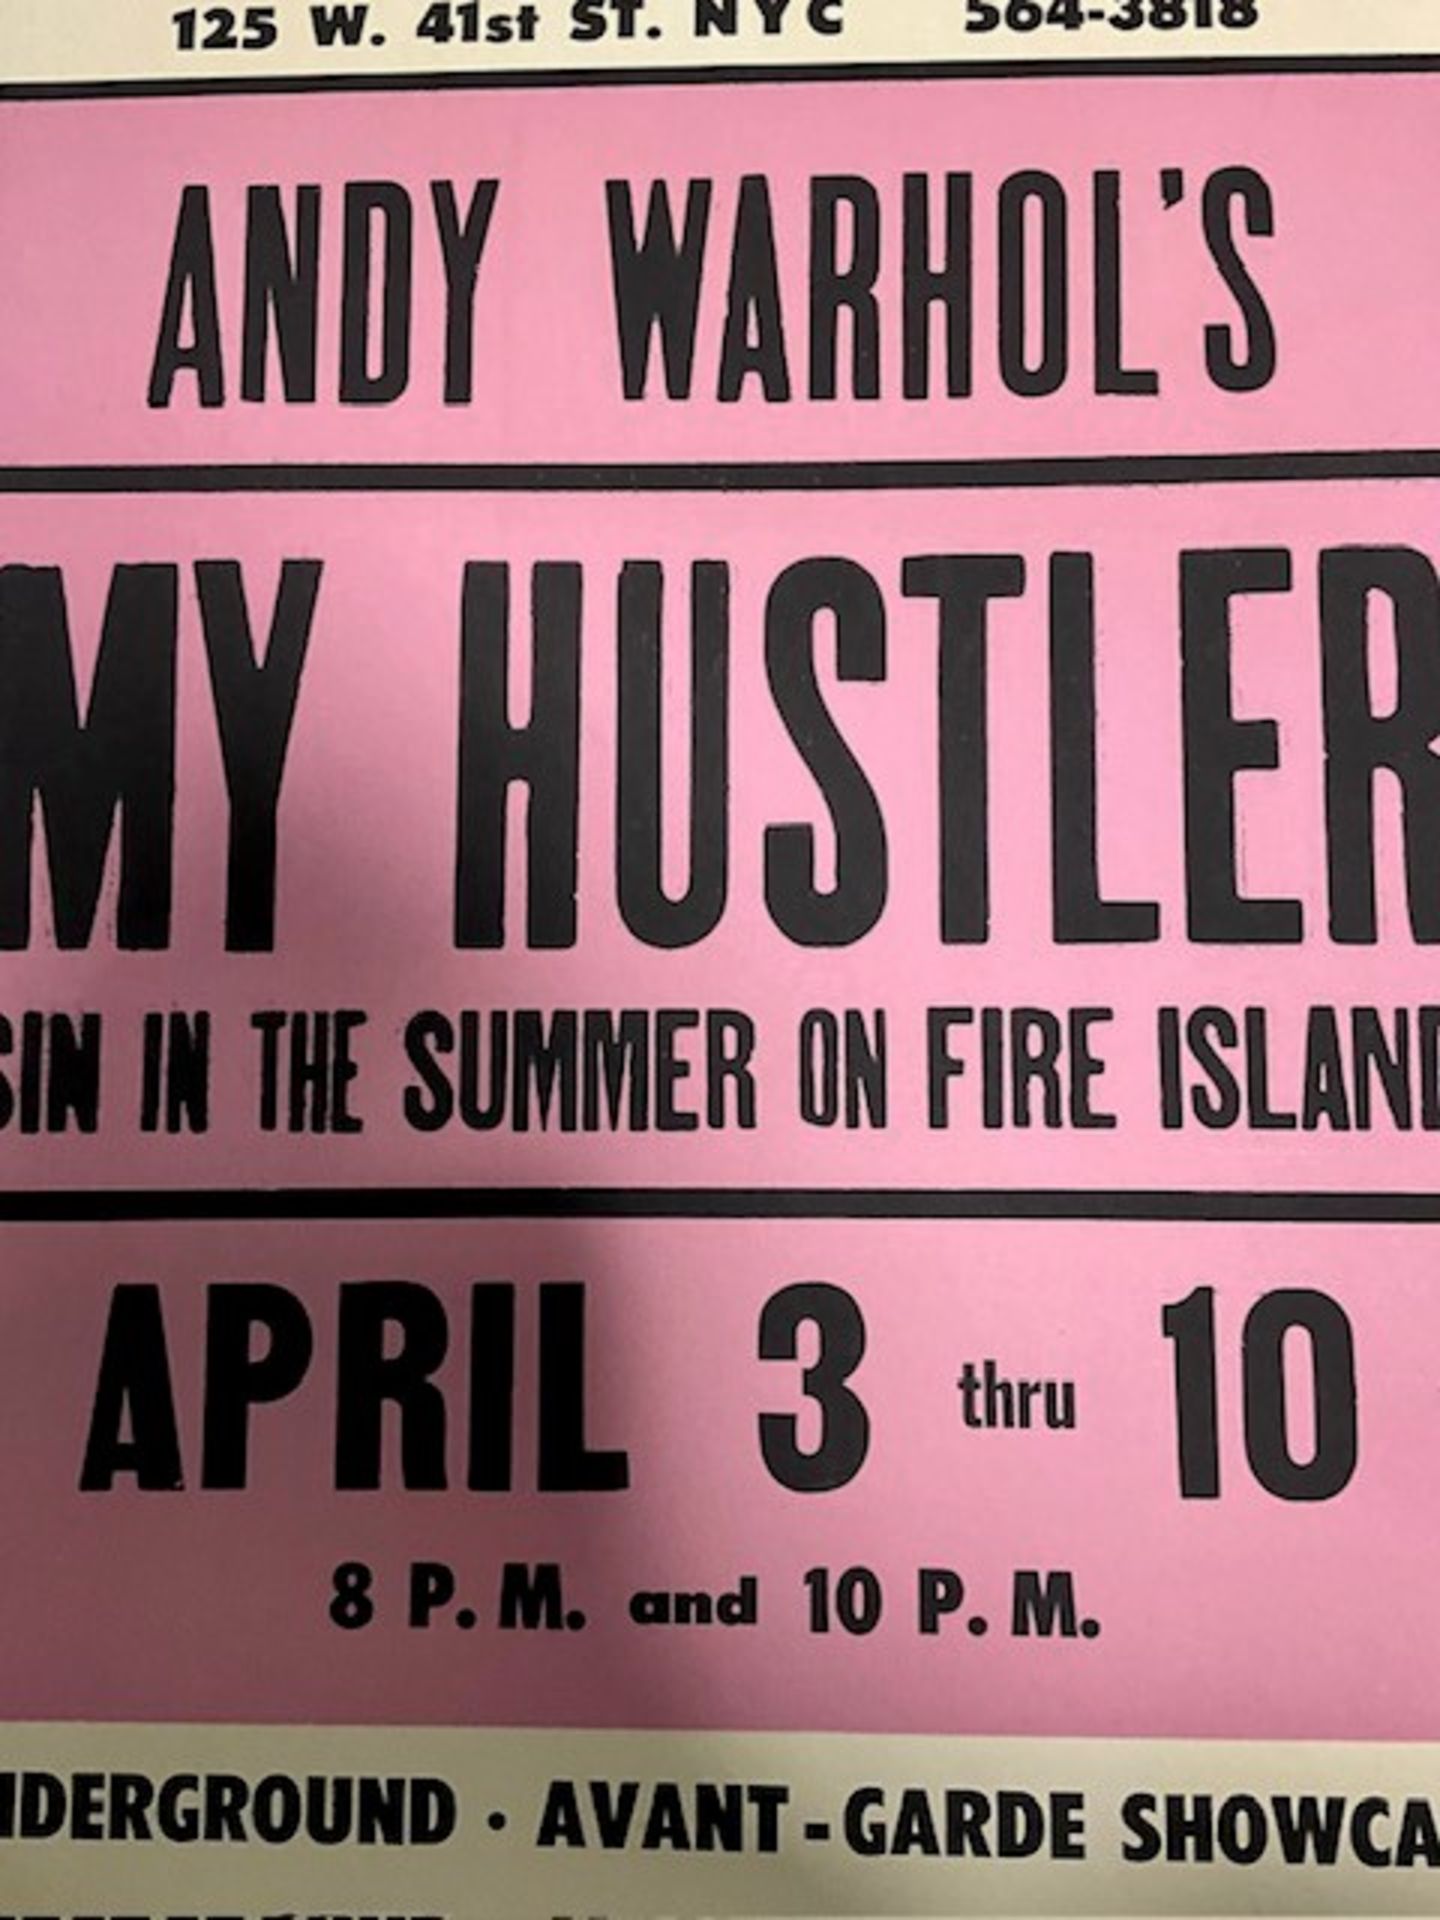 Andy Warhol " My Hustler" Poster - Image 7 of 8